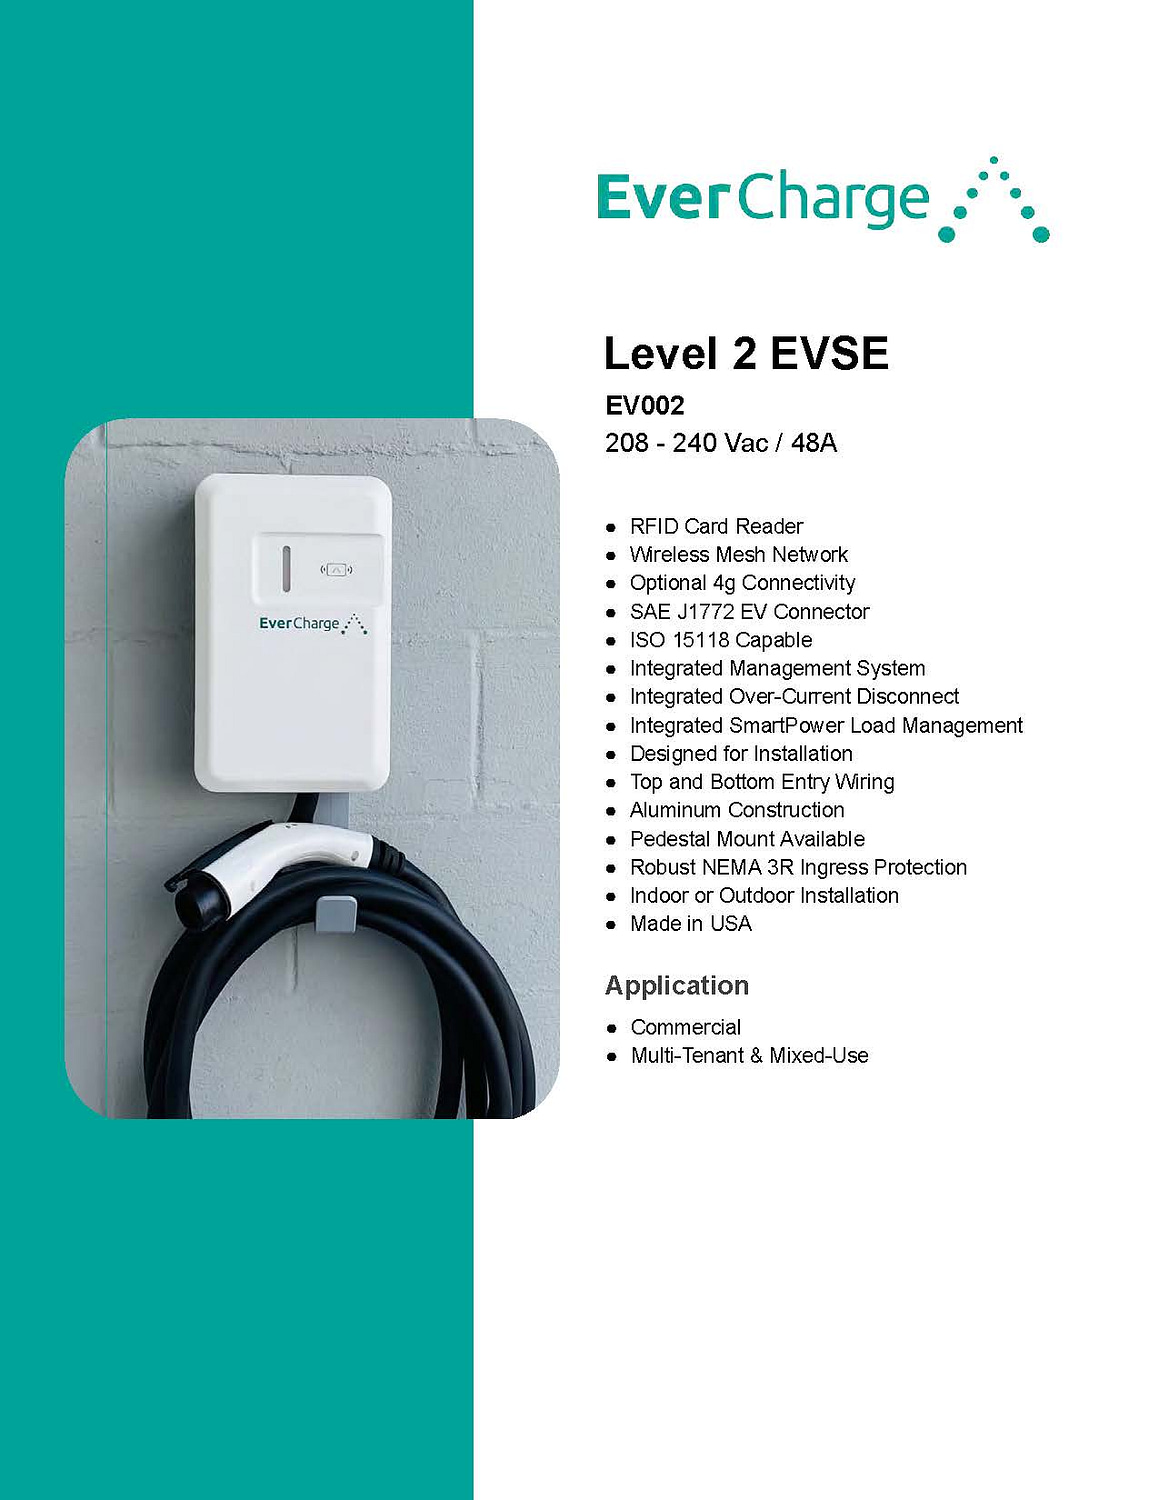 evercharge level 2 details